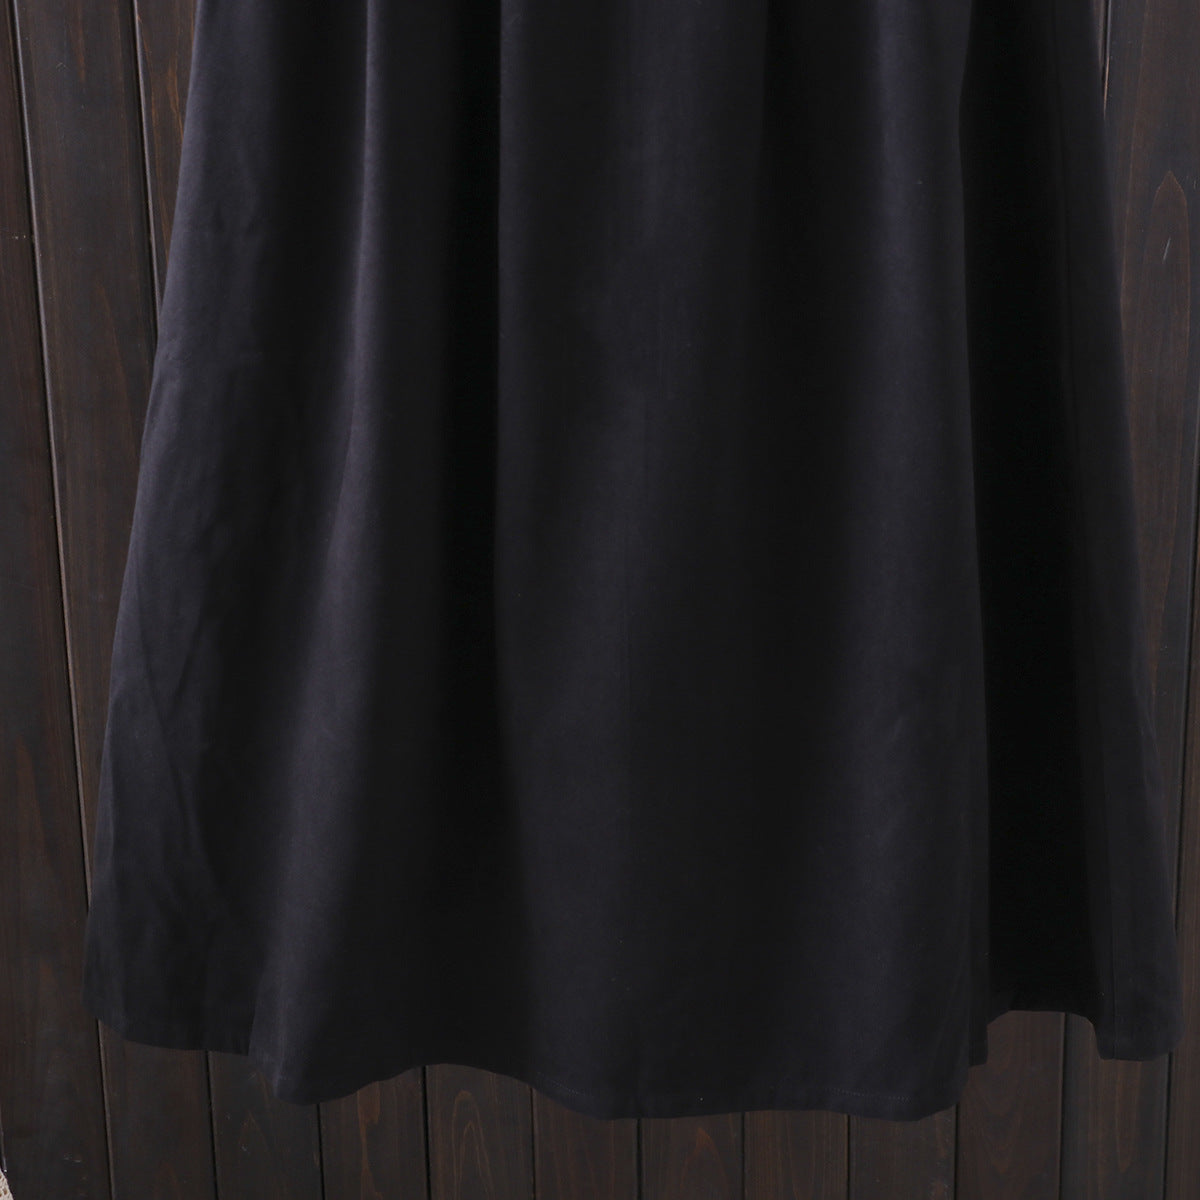 New stylecorduroyretroartistic styletie up elastic skirt3714